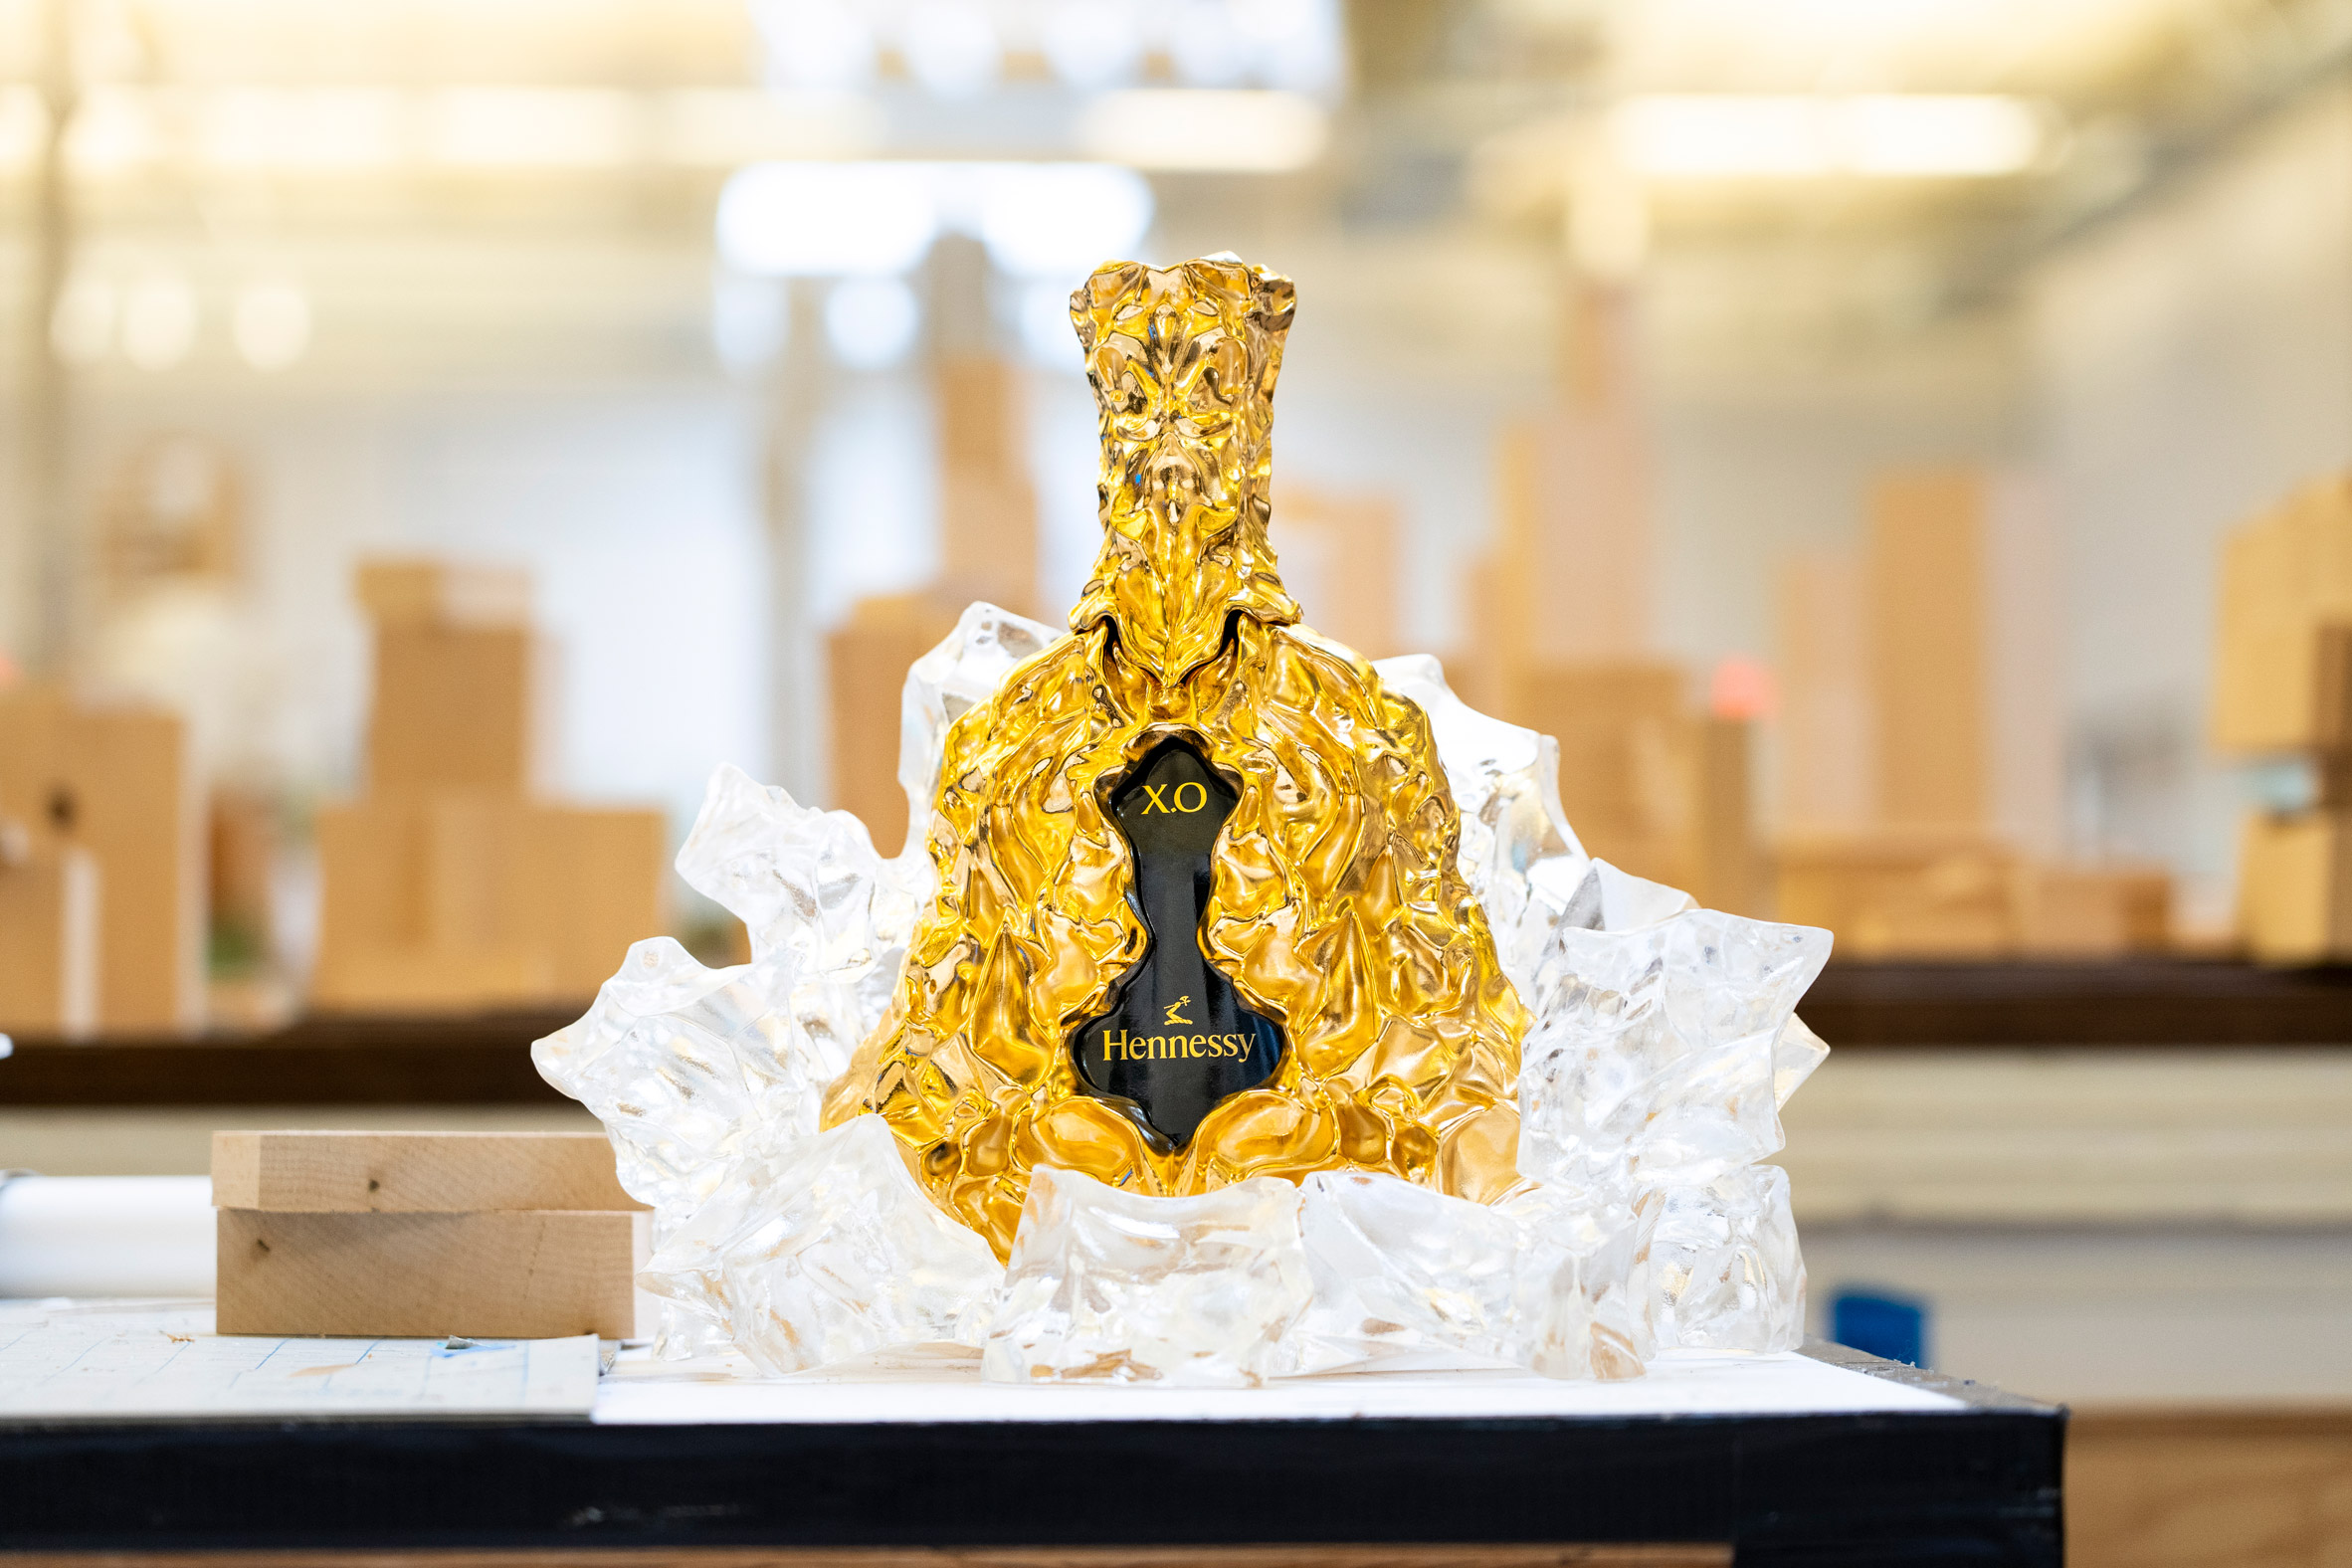 24-carat gold bottle